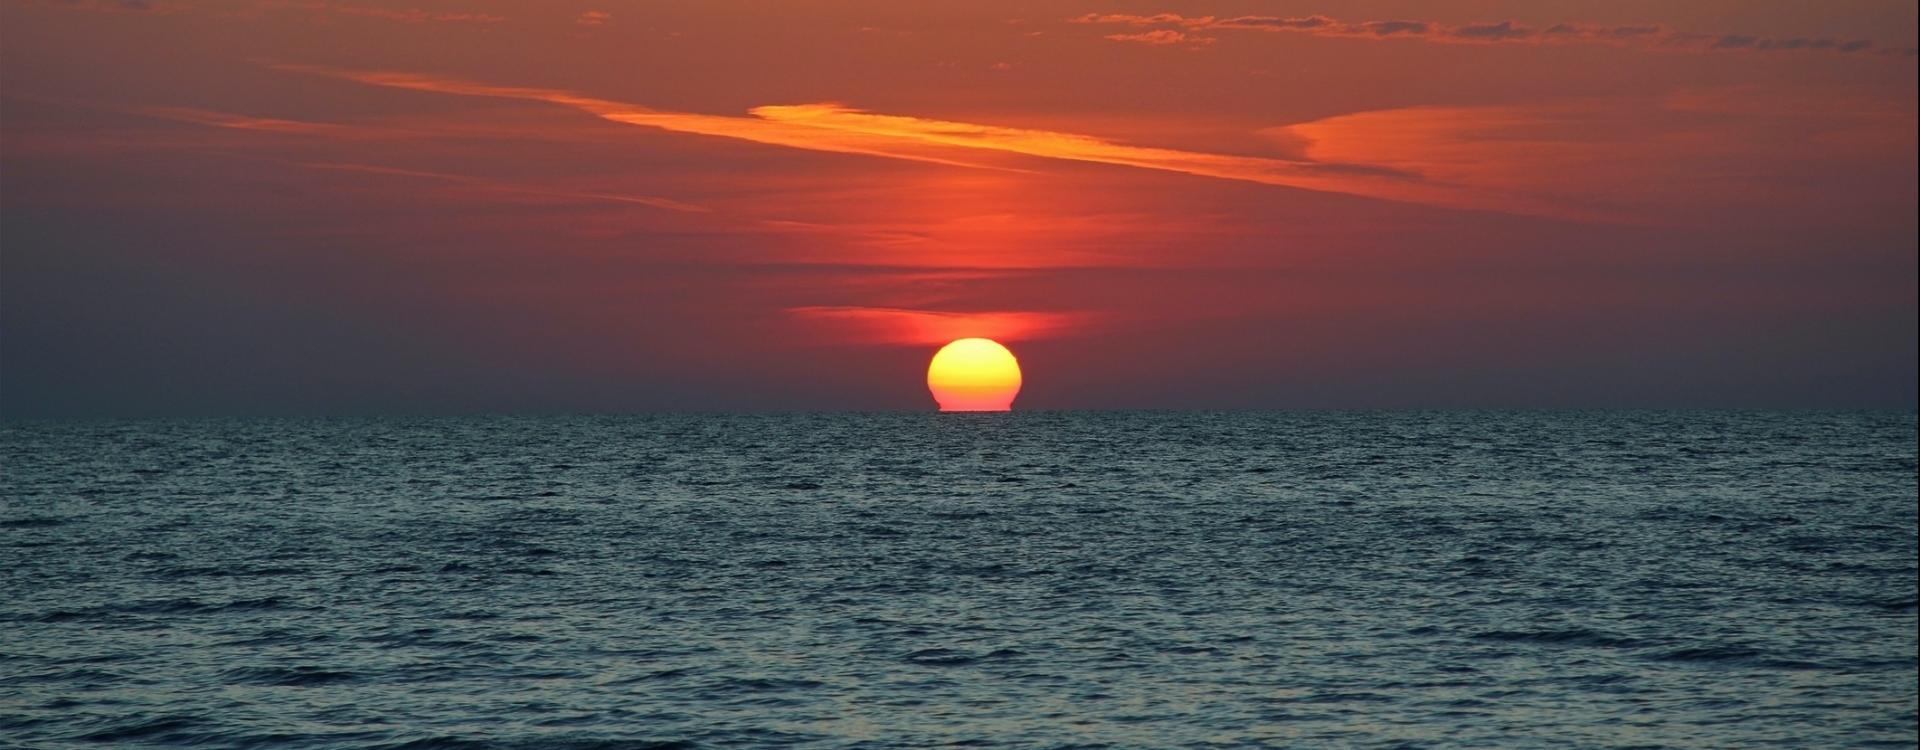 the sun sinks behind the horizon of the Black Sea